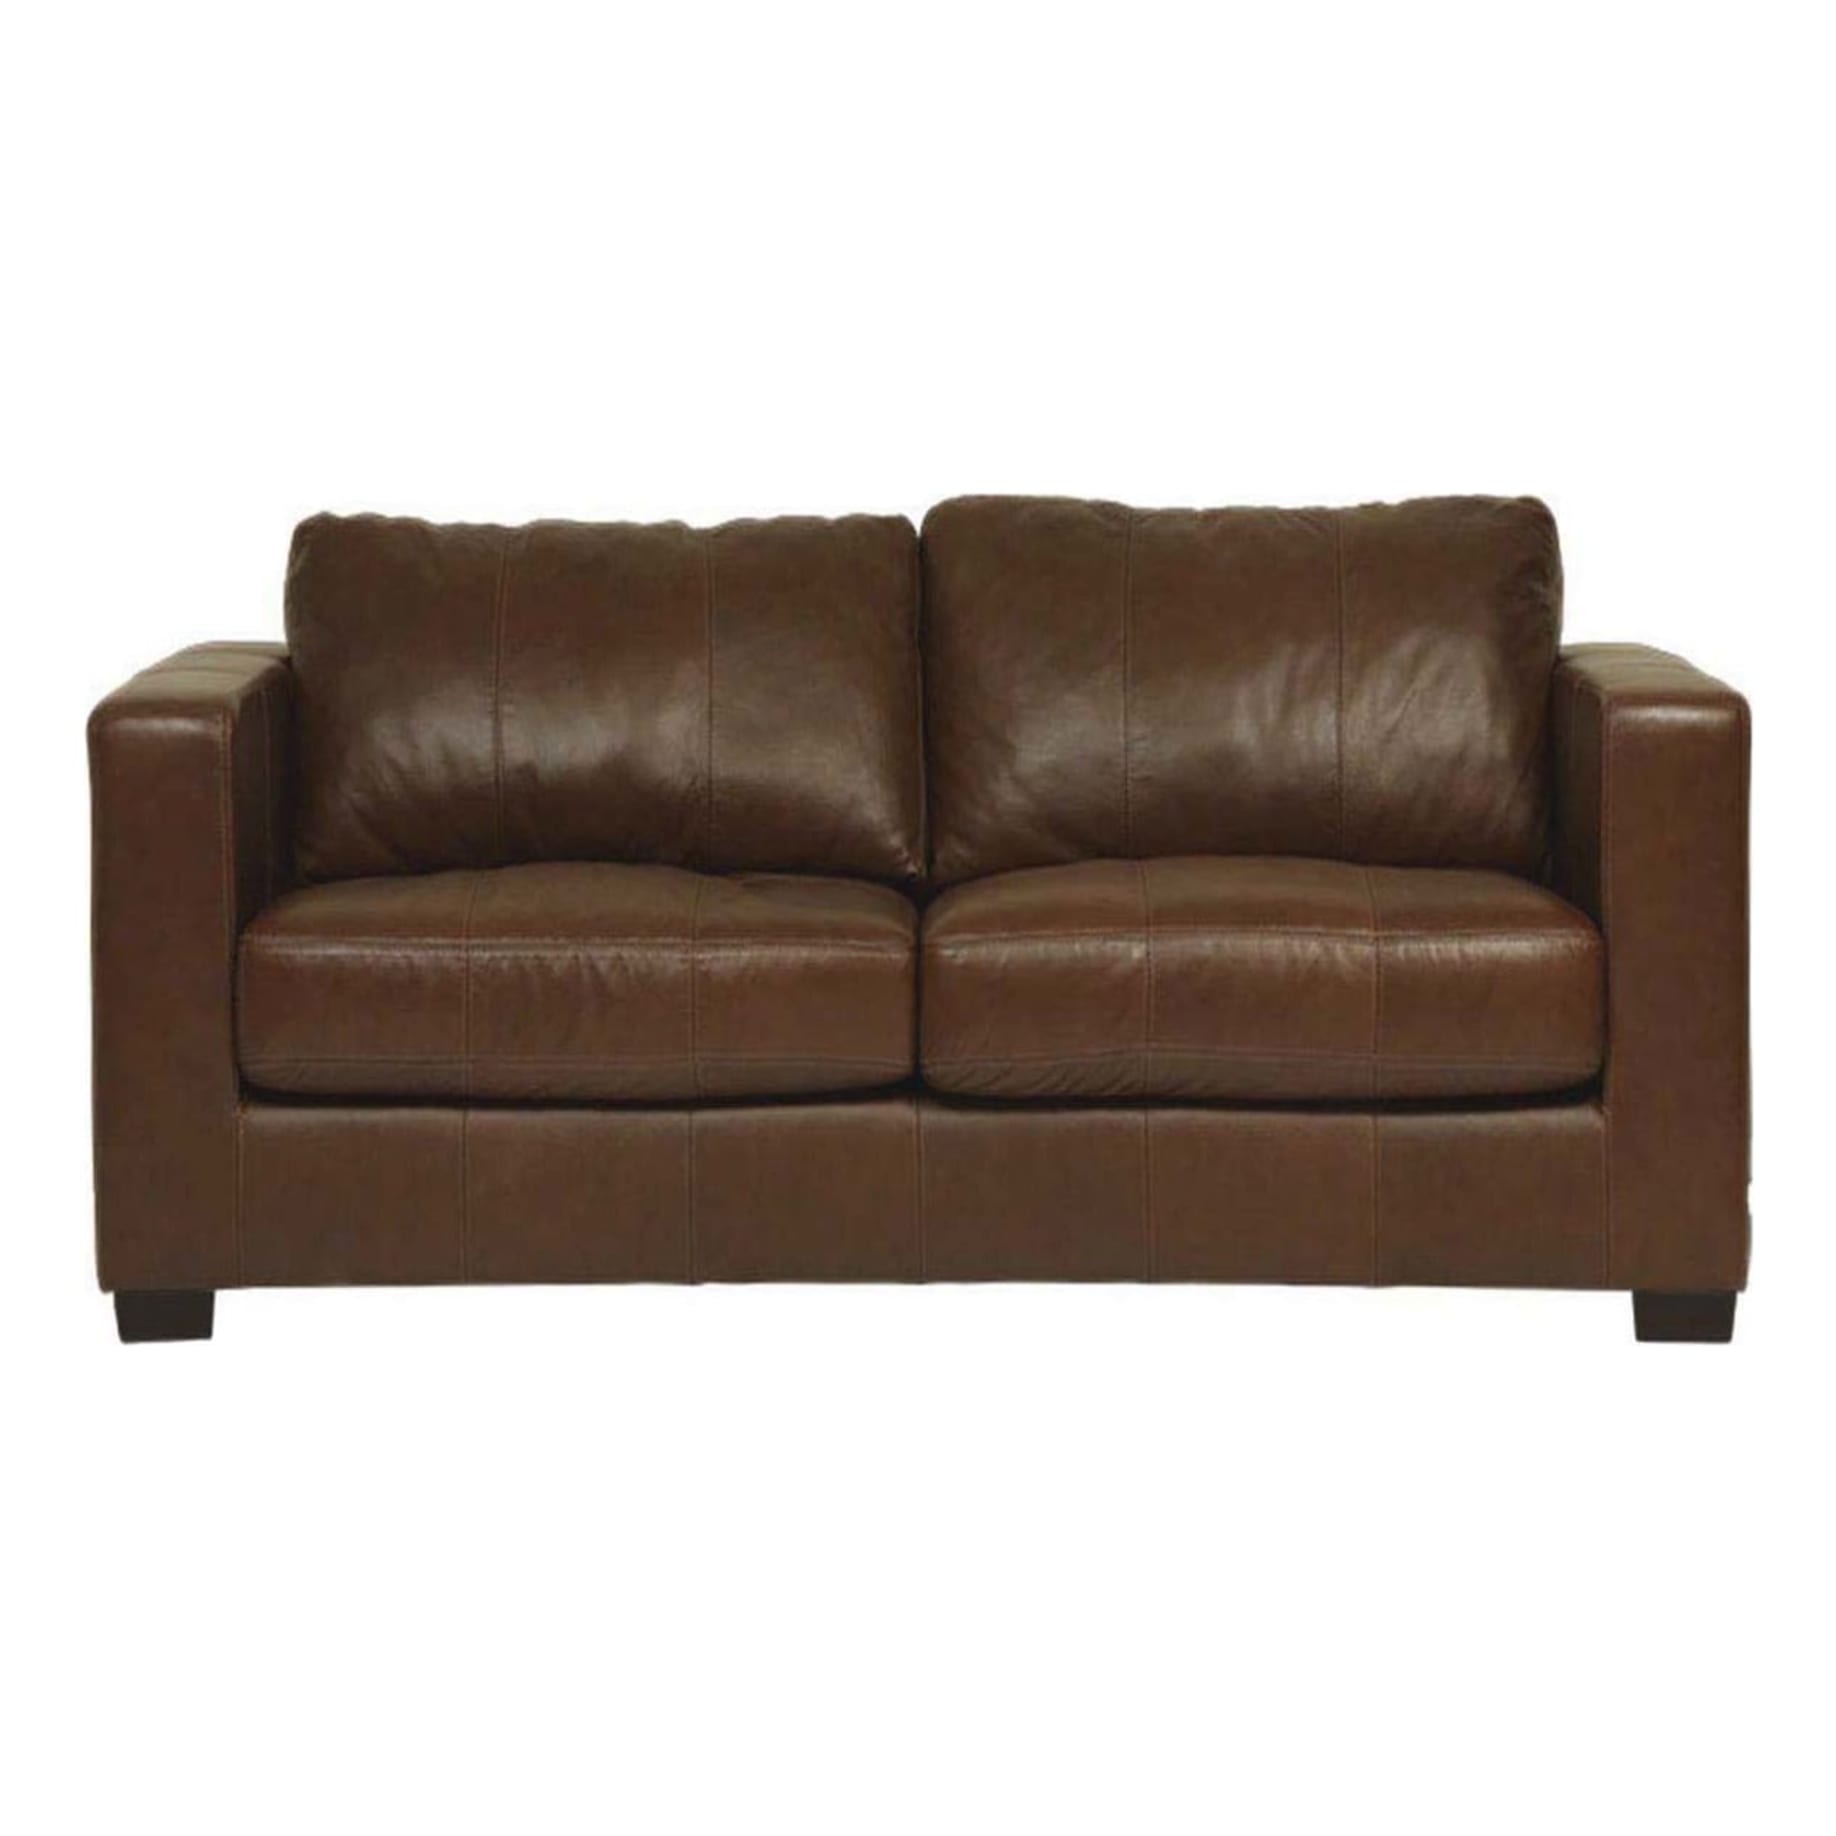 Gordon 2 Seater Sofa in Aniline Leather Natural